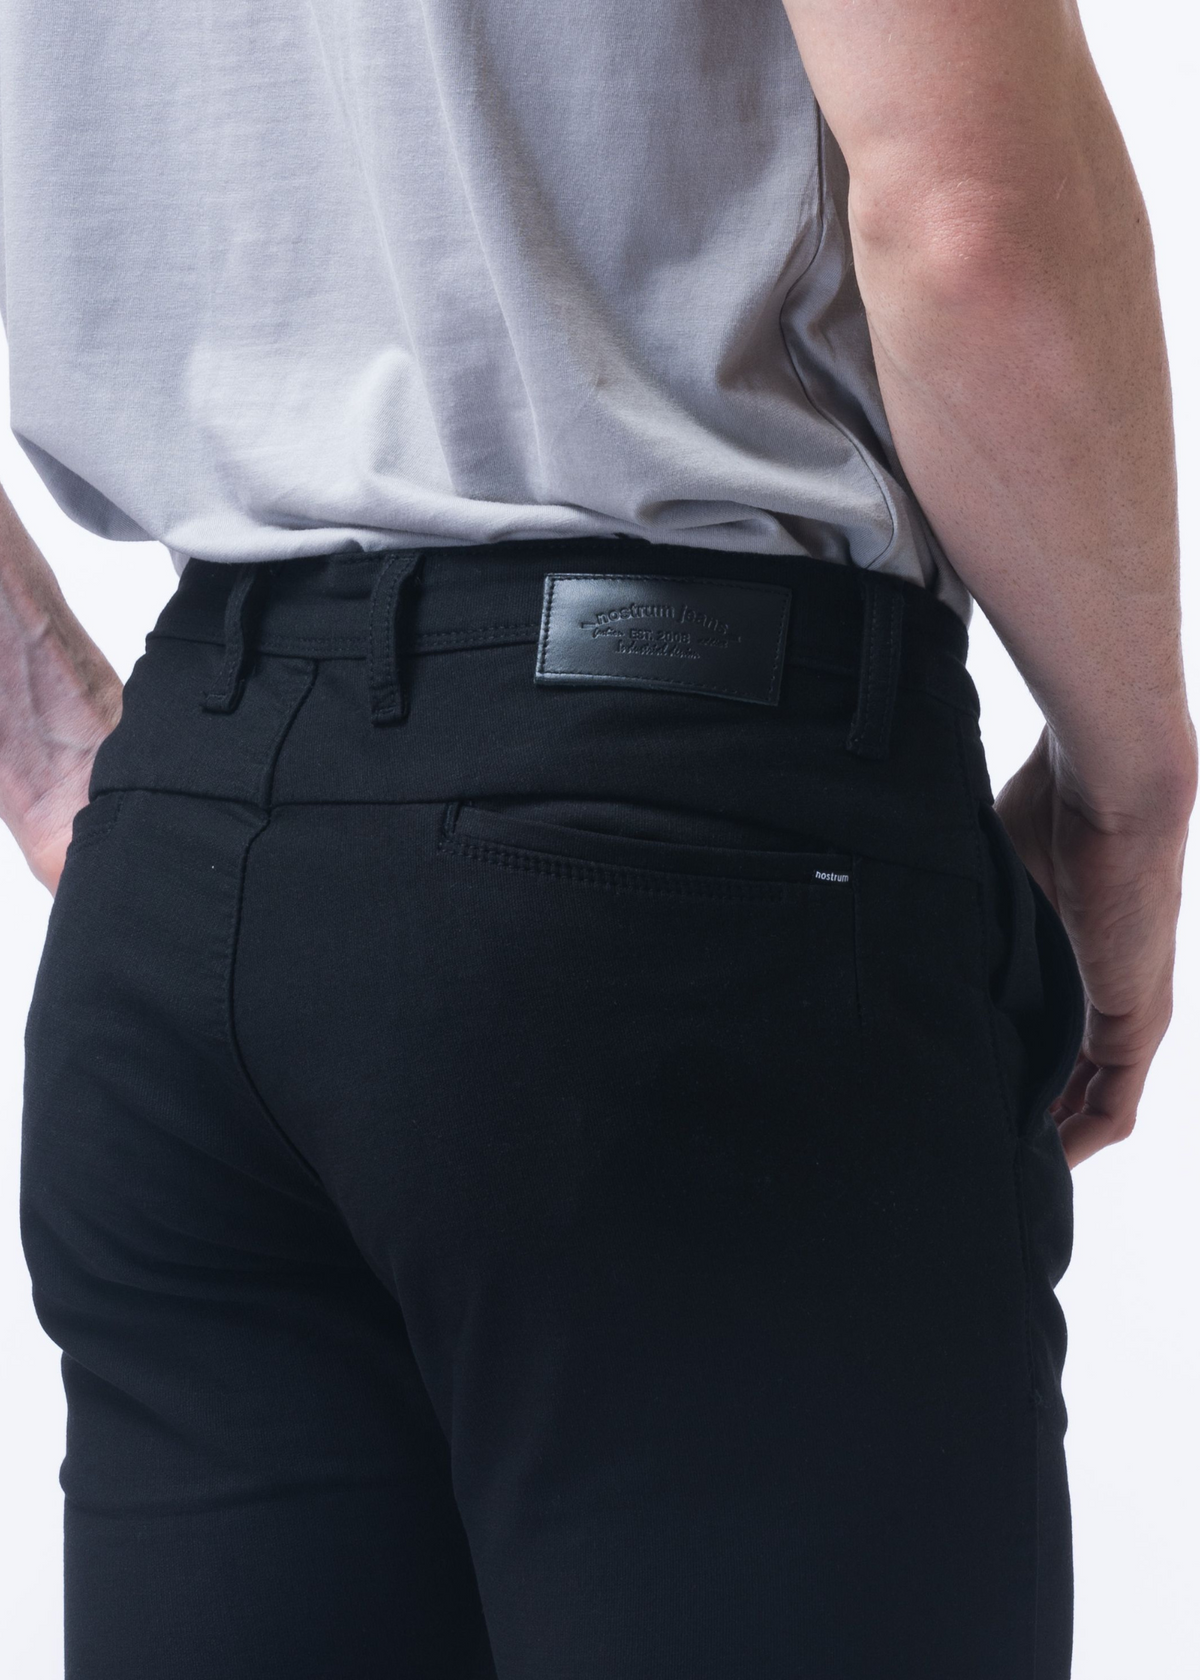 Rapido Slim Fit Black Denim Jeans For Men - Nostrum Fashion